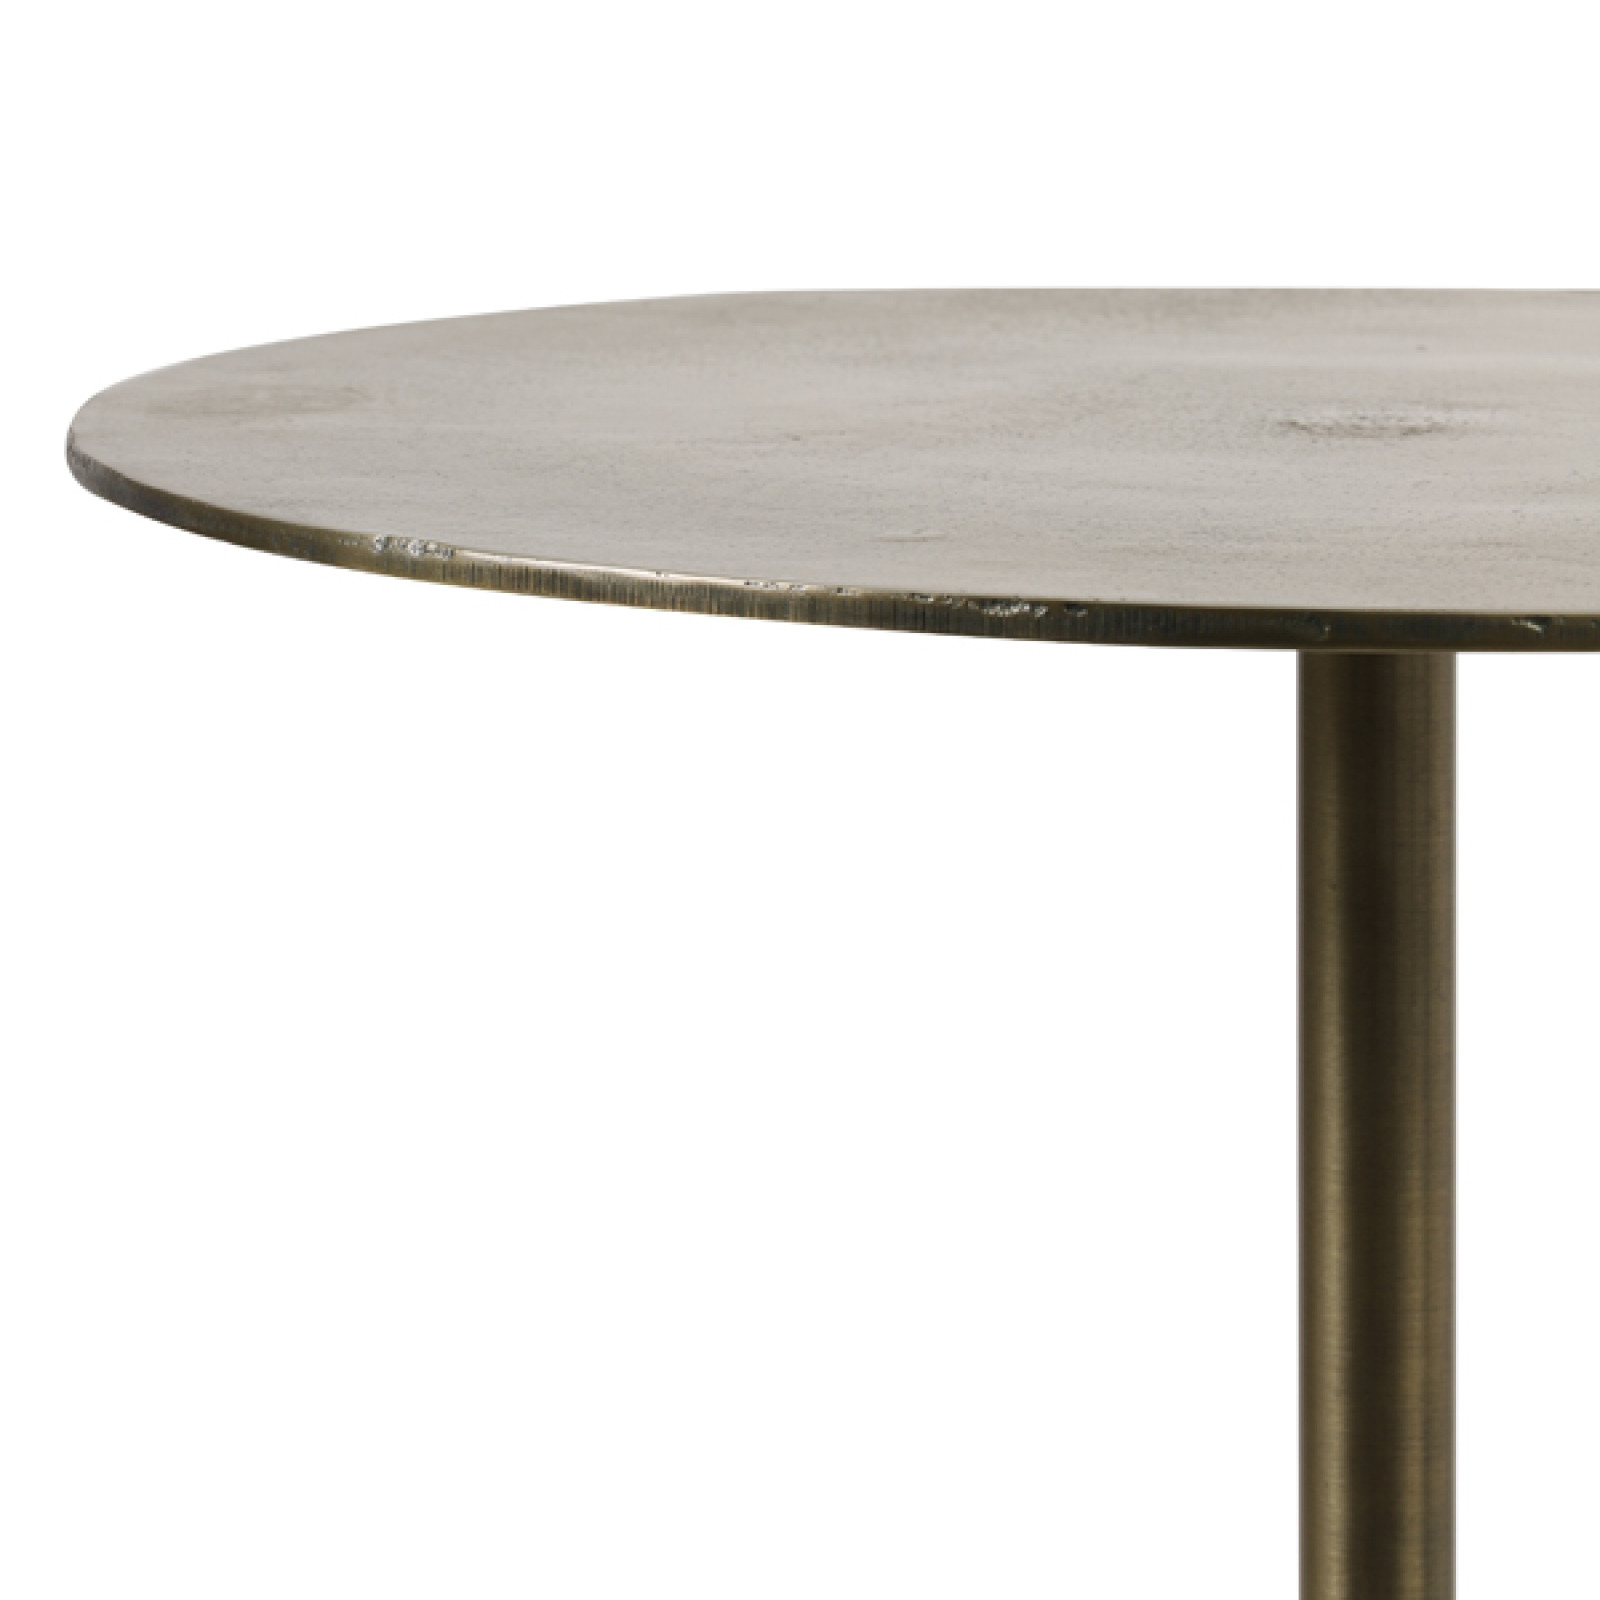 Molo antique bronze side table